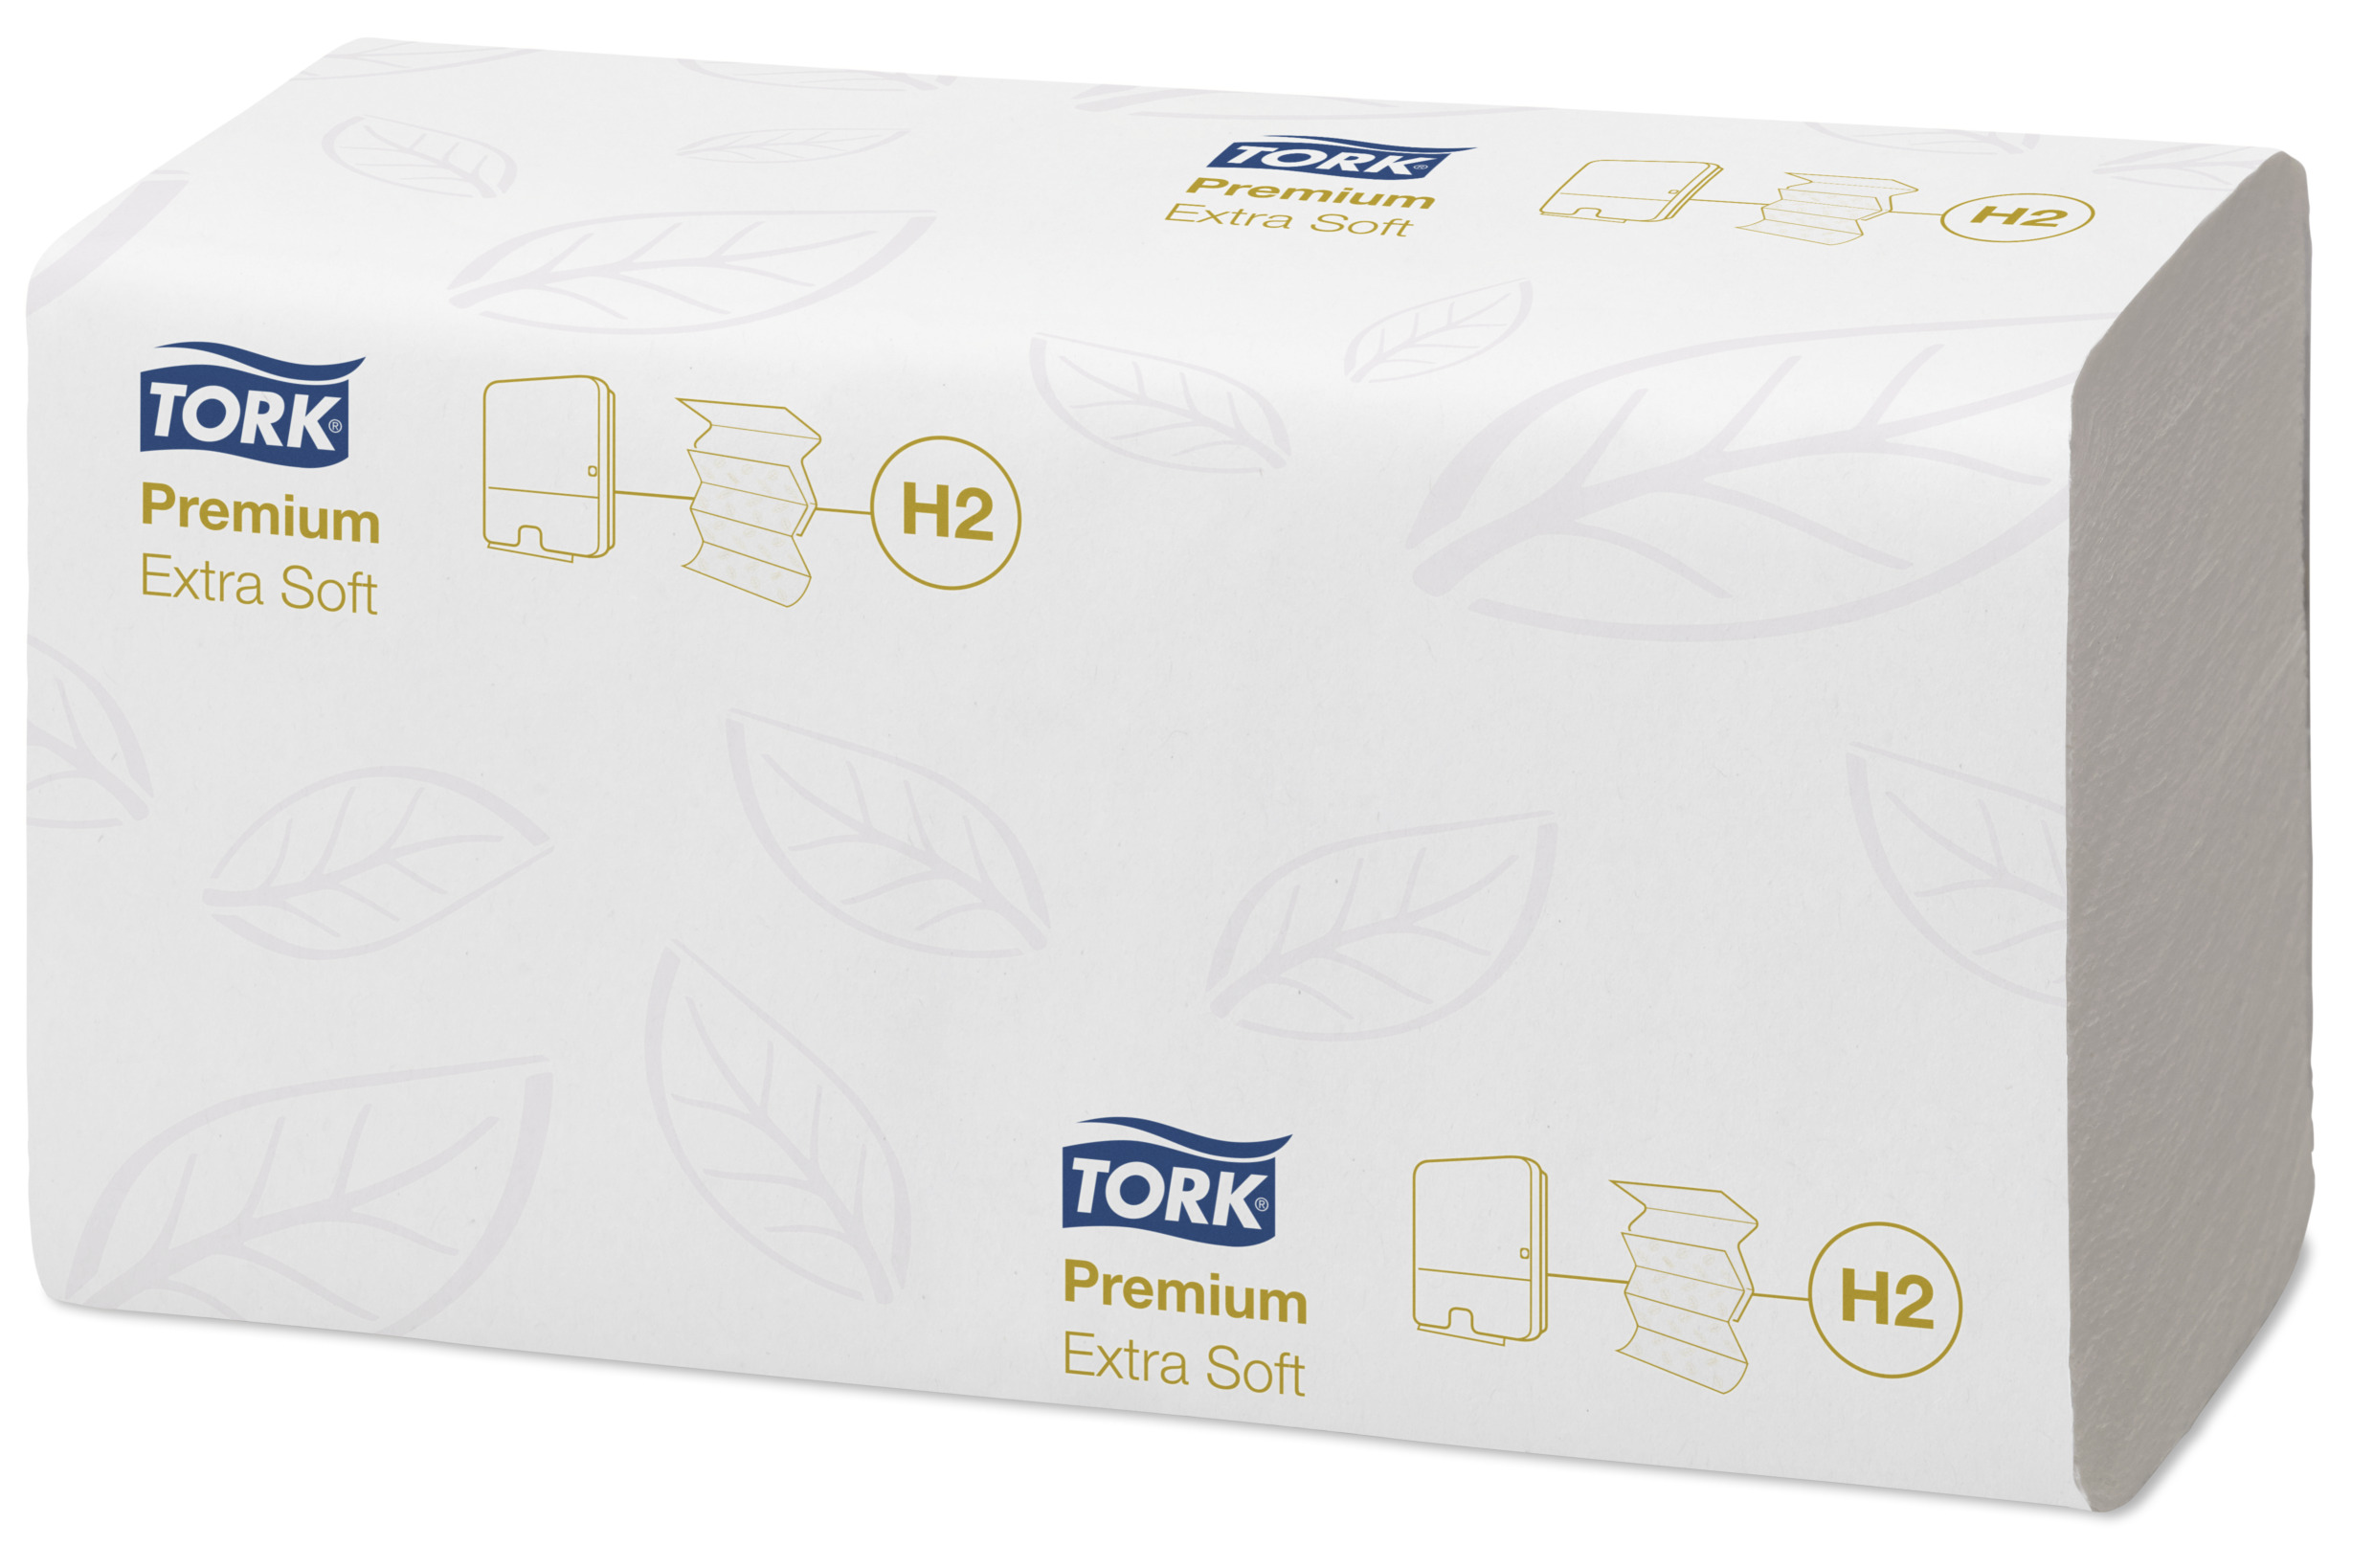 TORK Prem Hand Towel Interfold 21/100s #10029762